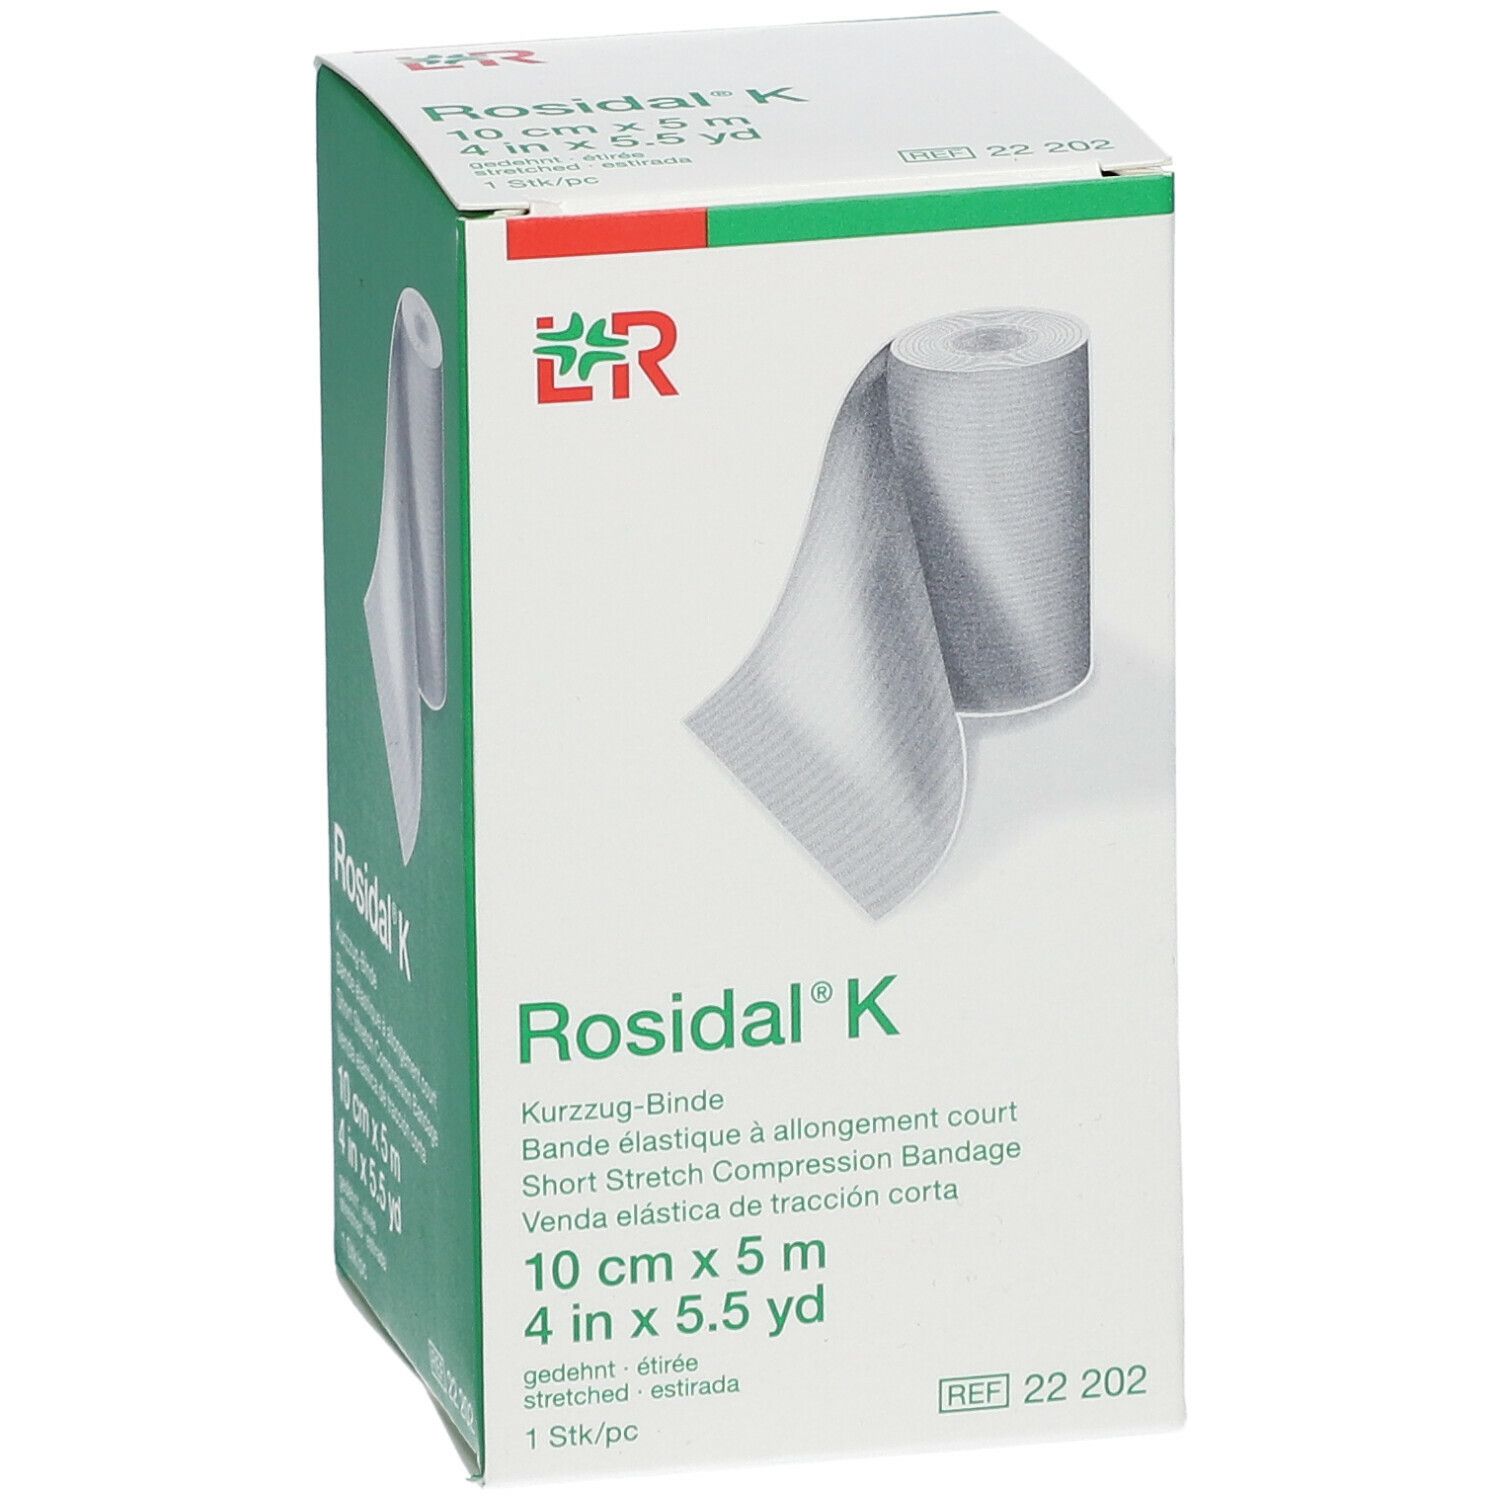 Rosidal® K Benda a Corta Estensione 10 cm x 5 m